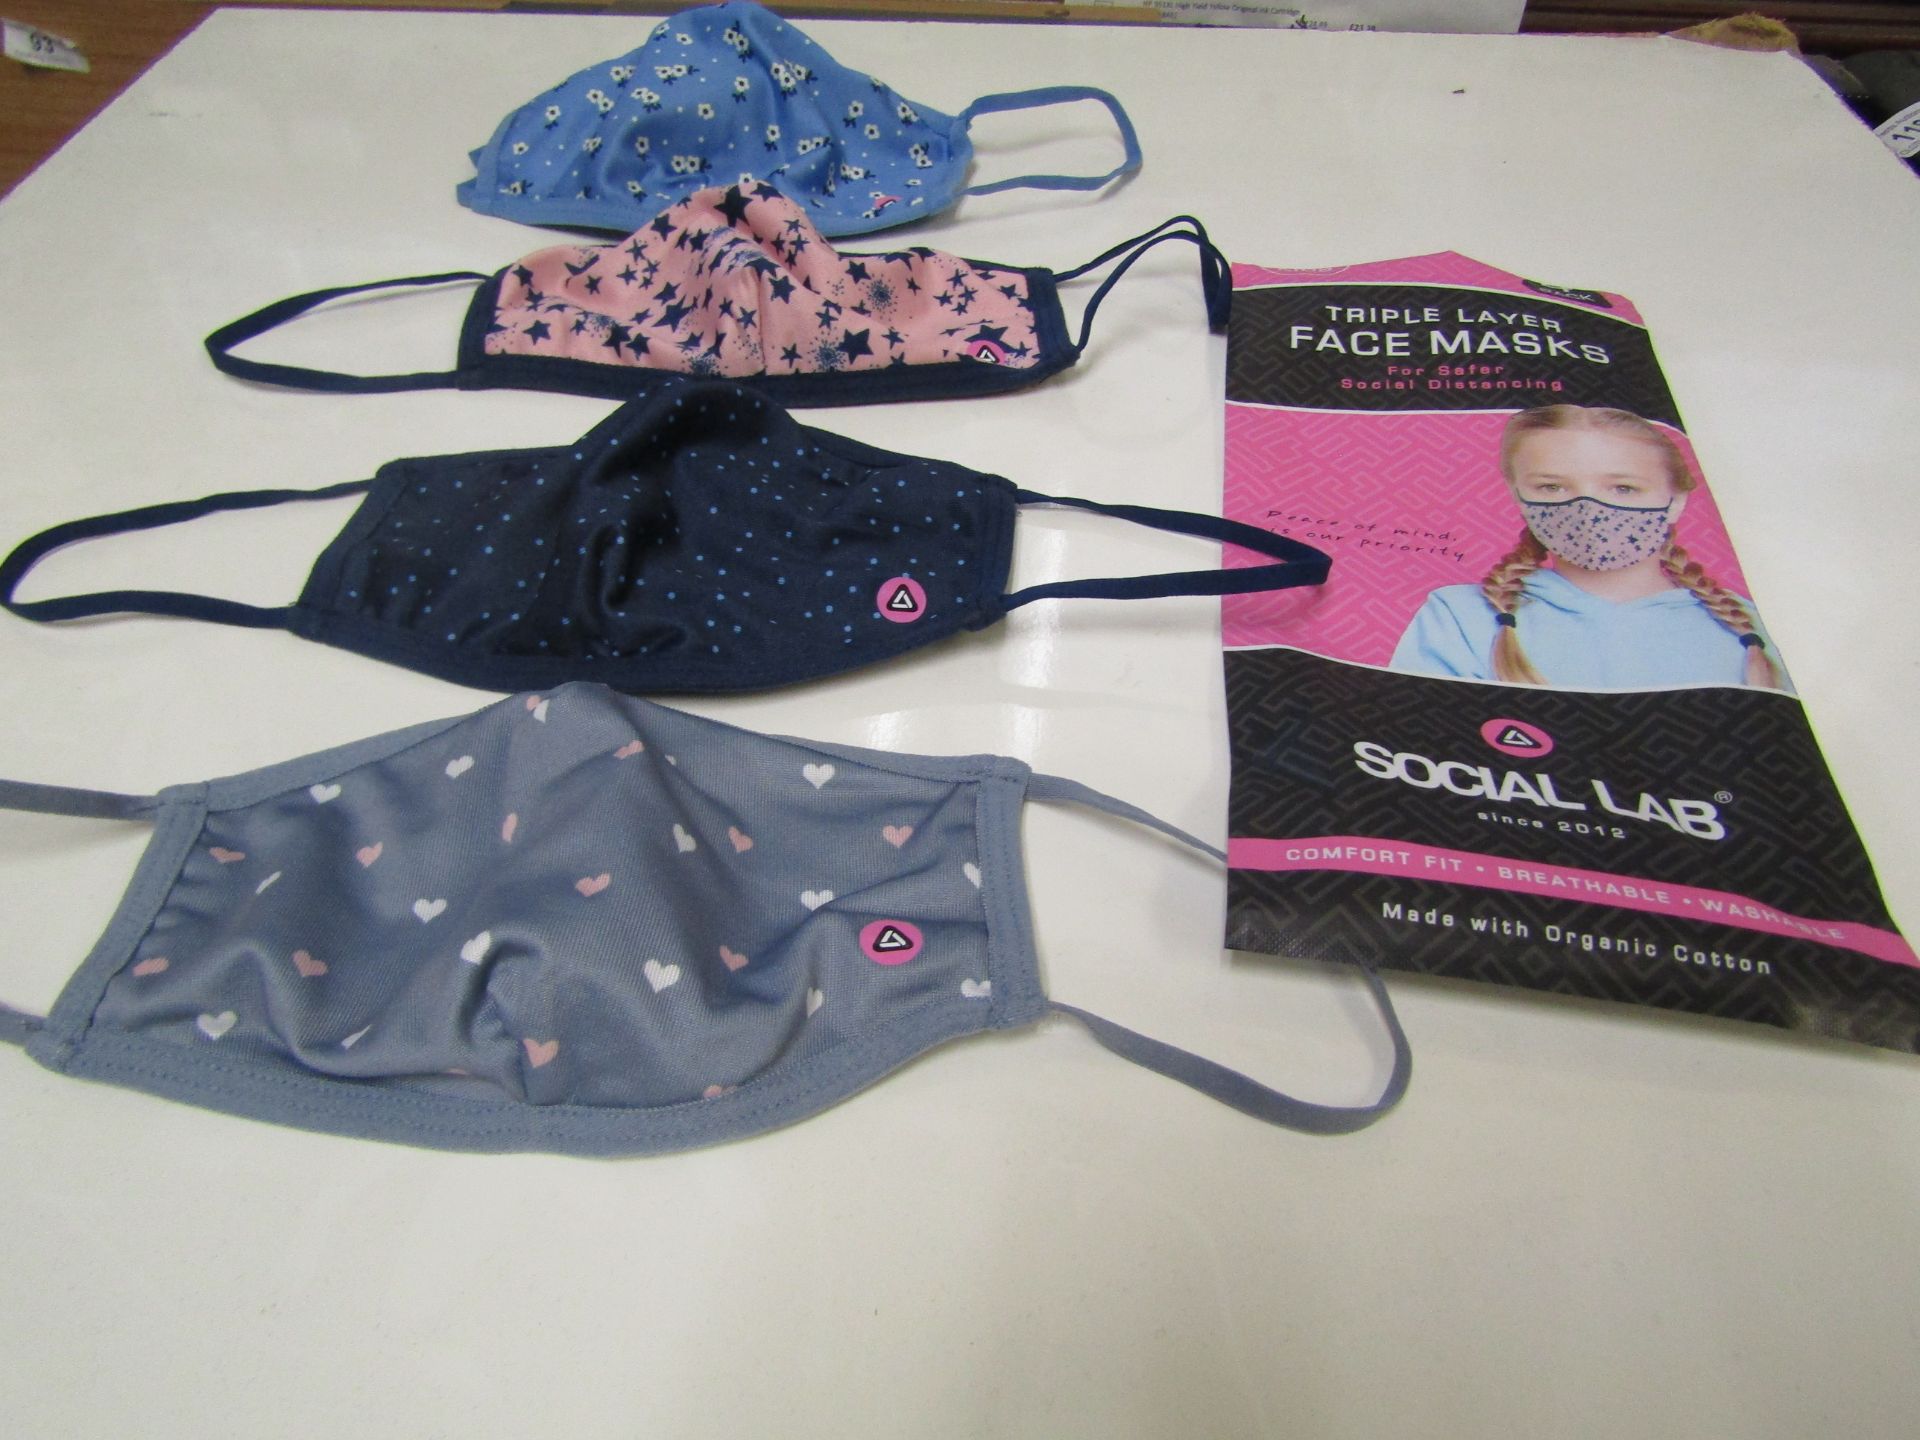 5 x packs (4 masks per pack) of Girls Social Lab Triple Layer Organic Cotton Face Masks RRP £12.99